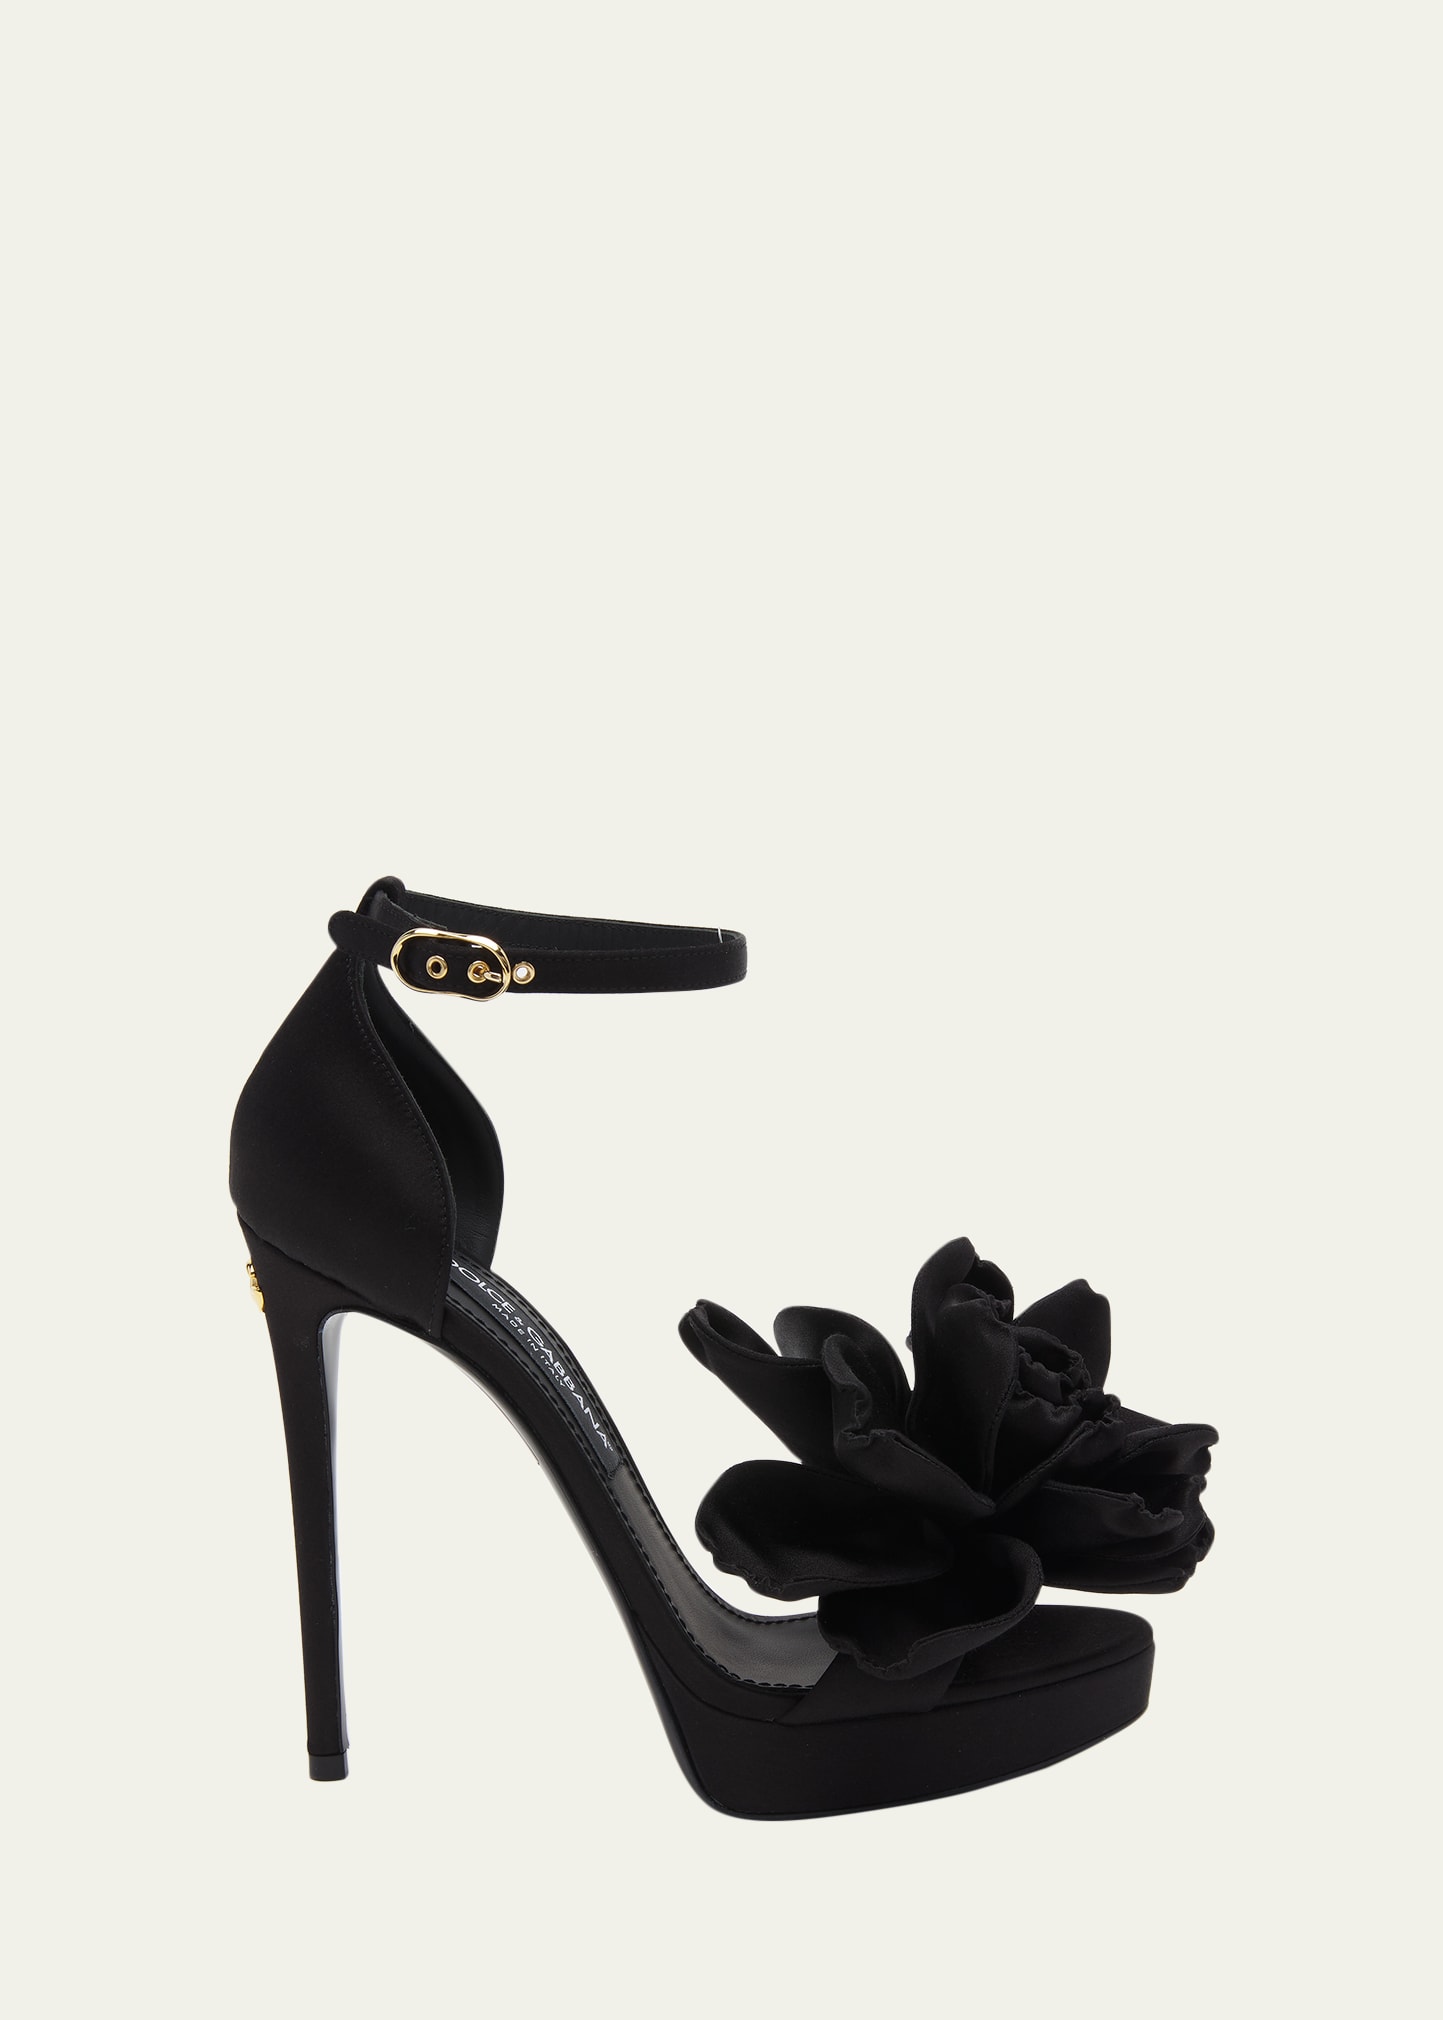 Designer Sandals Fashion GGity Flat Slides Woman Heel Shoes Double G Flip  Flops Luxury Slippers Leather Sandals Dfhfgh From Parisslides, $70.36